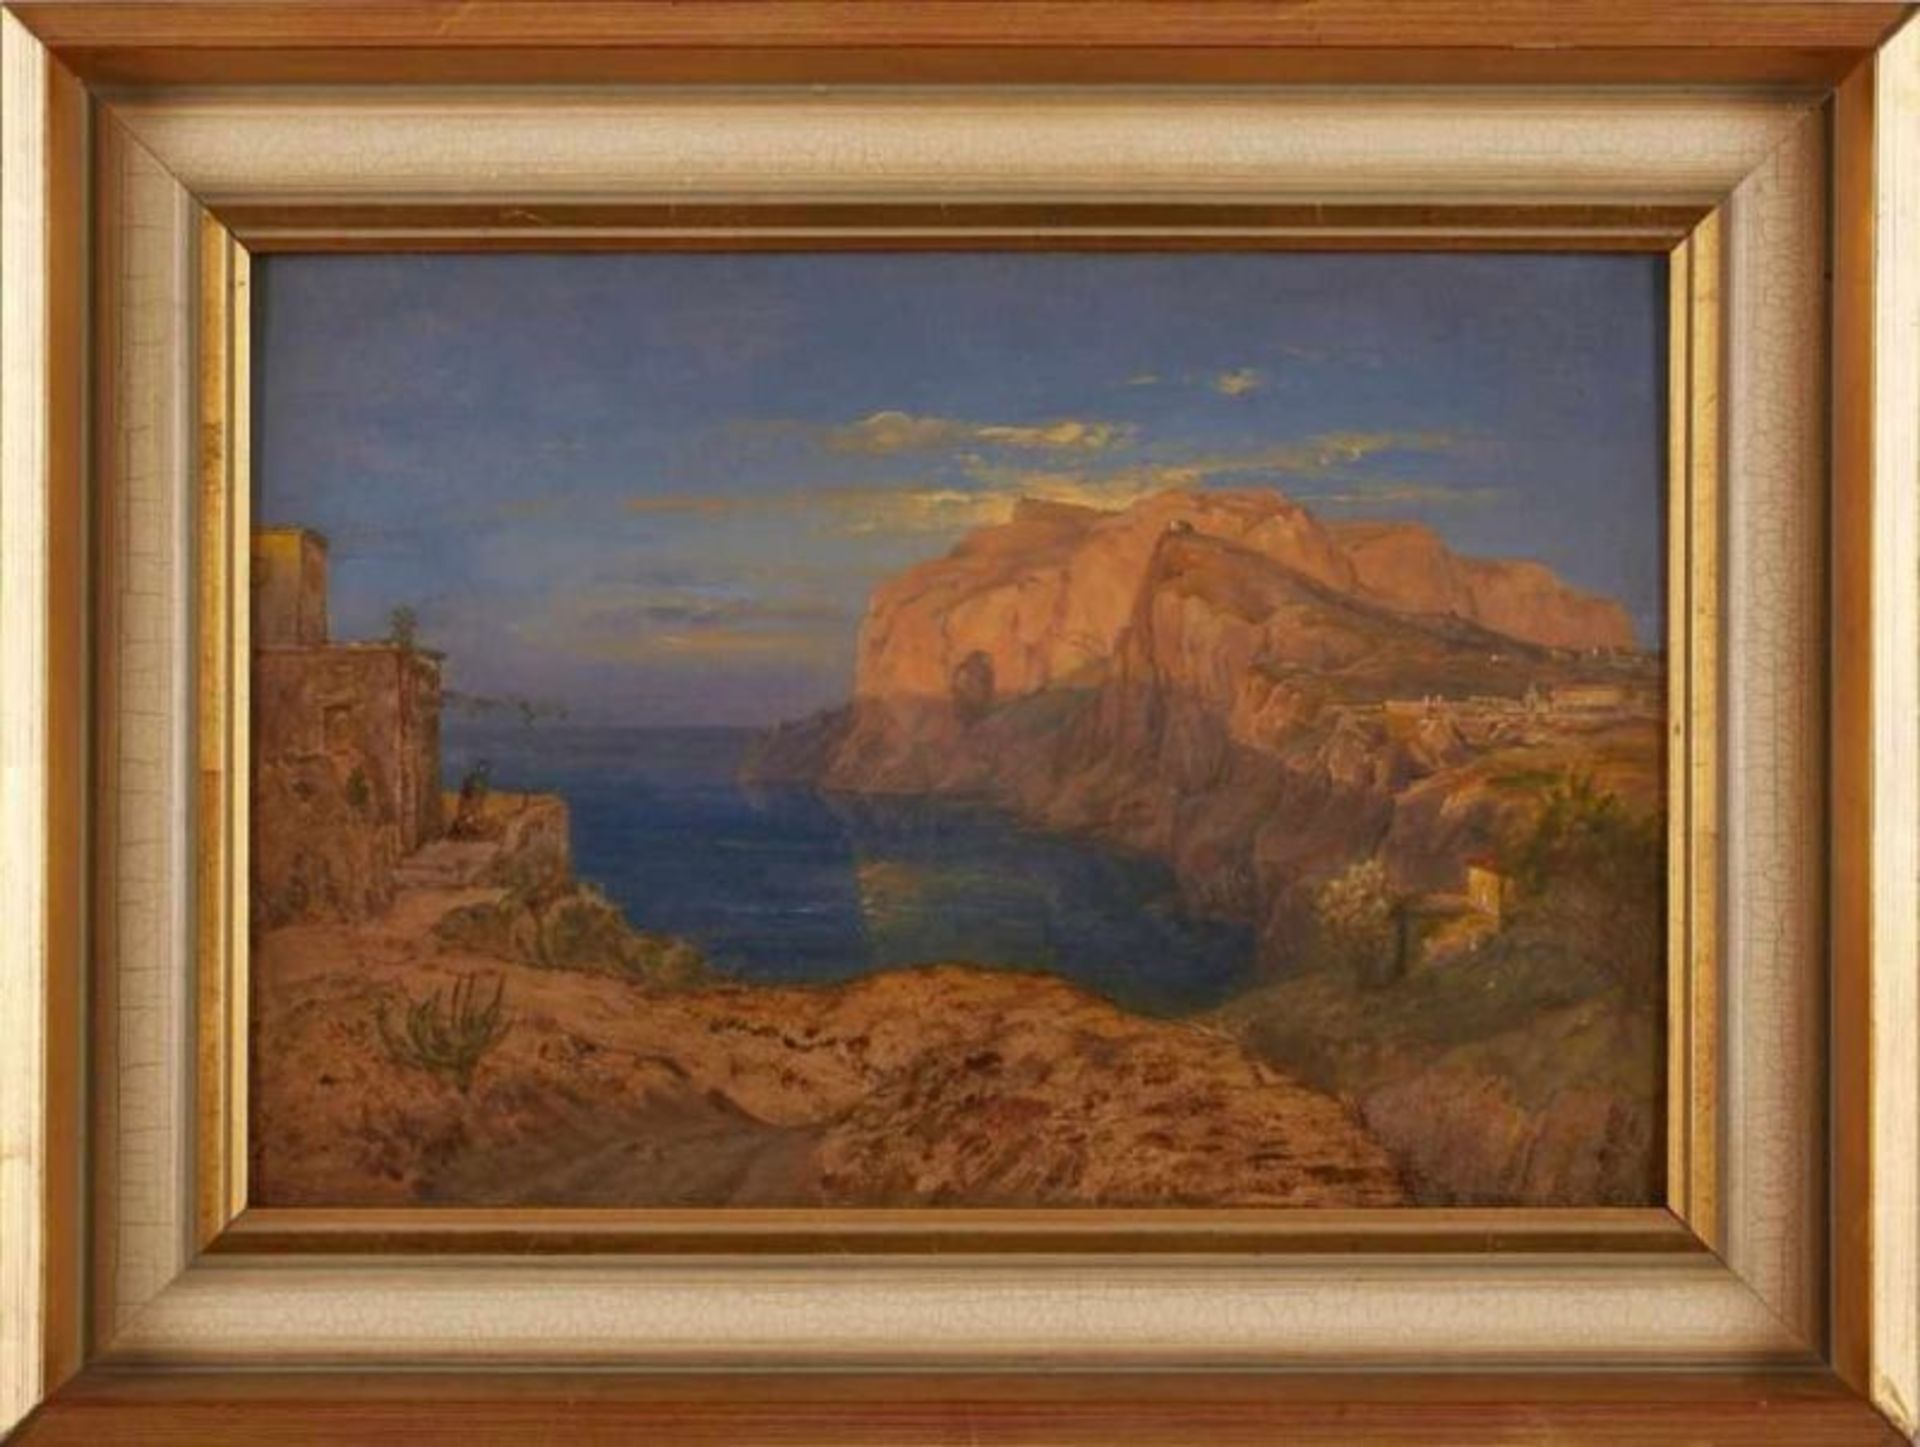 Gemälde/Ölstudie Carl Morgenstern 1811 Frankfurt - 1893 Frankfurt "Capri" Verso von alter Hand - Image 2 of 3